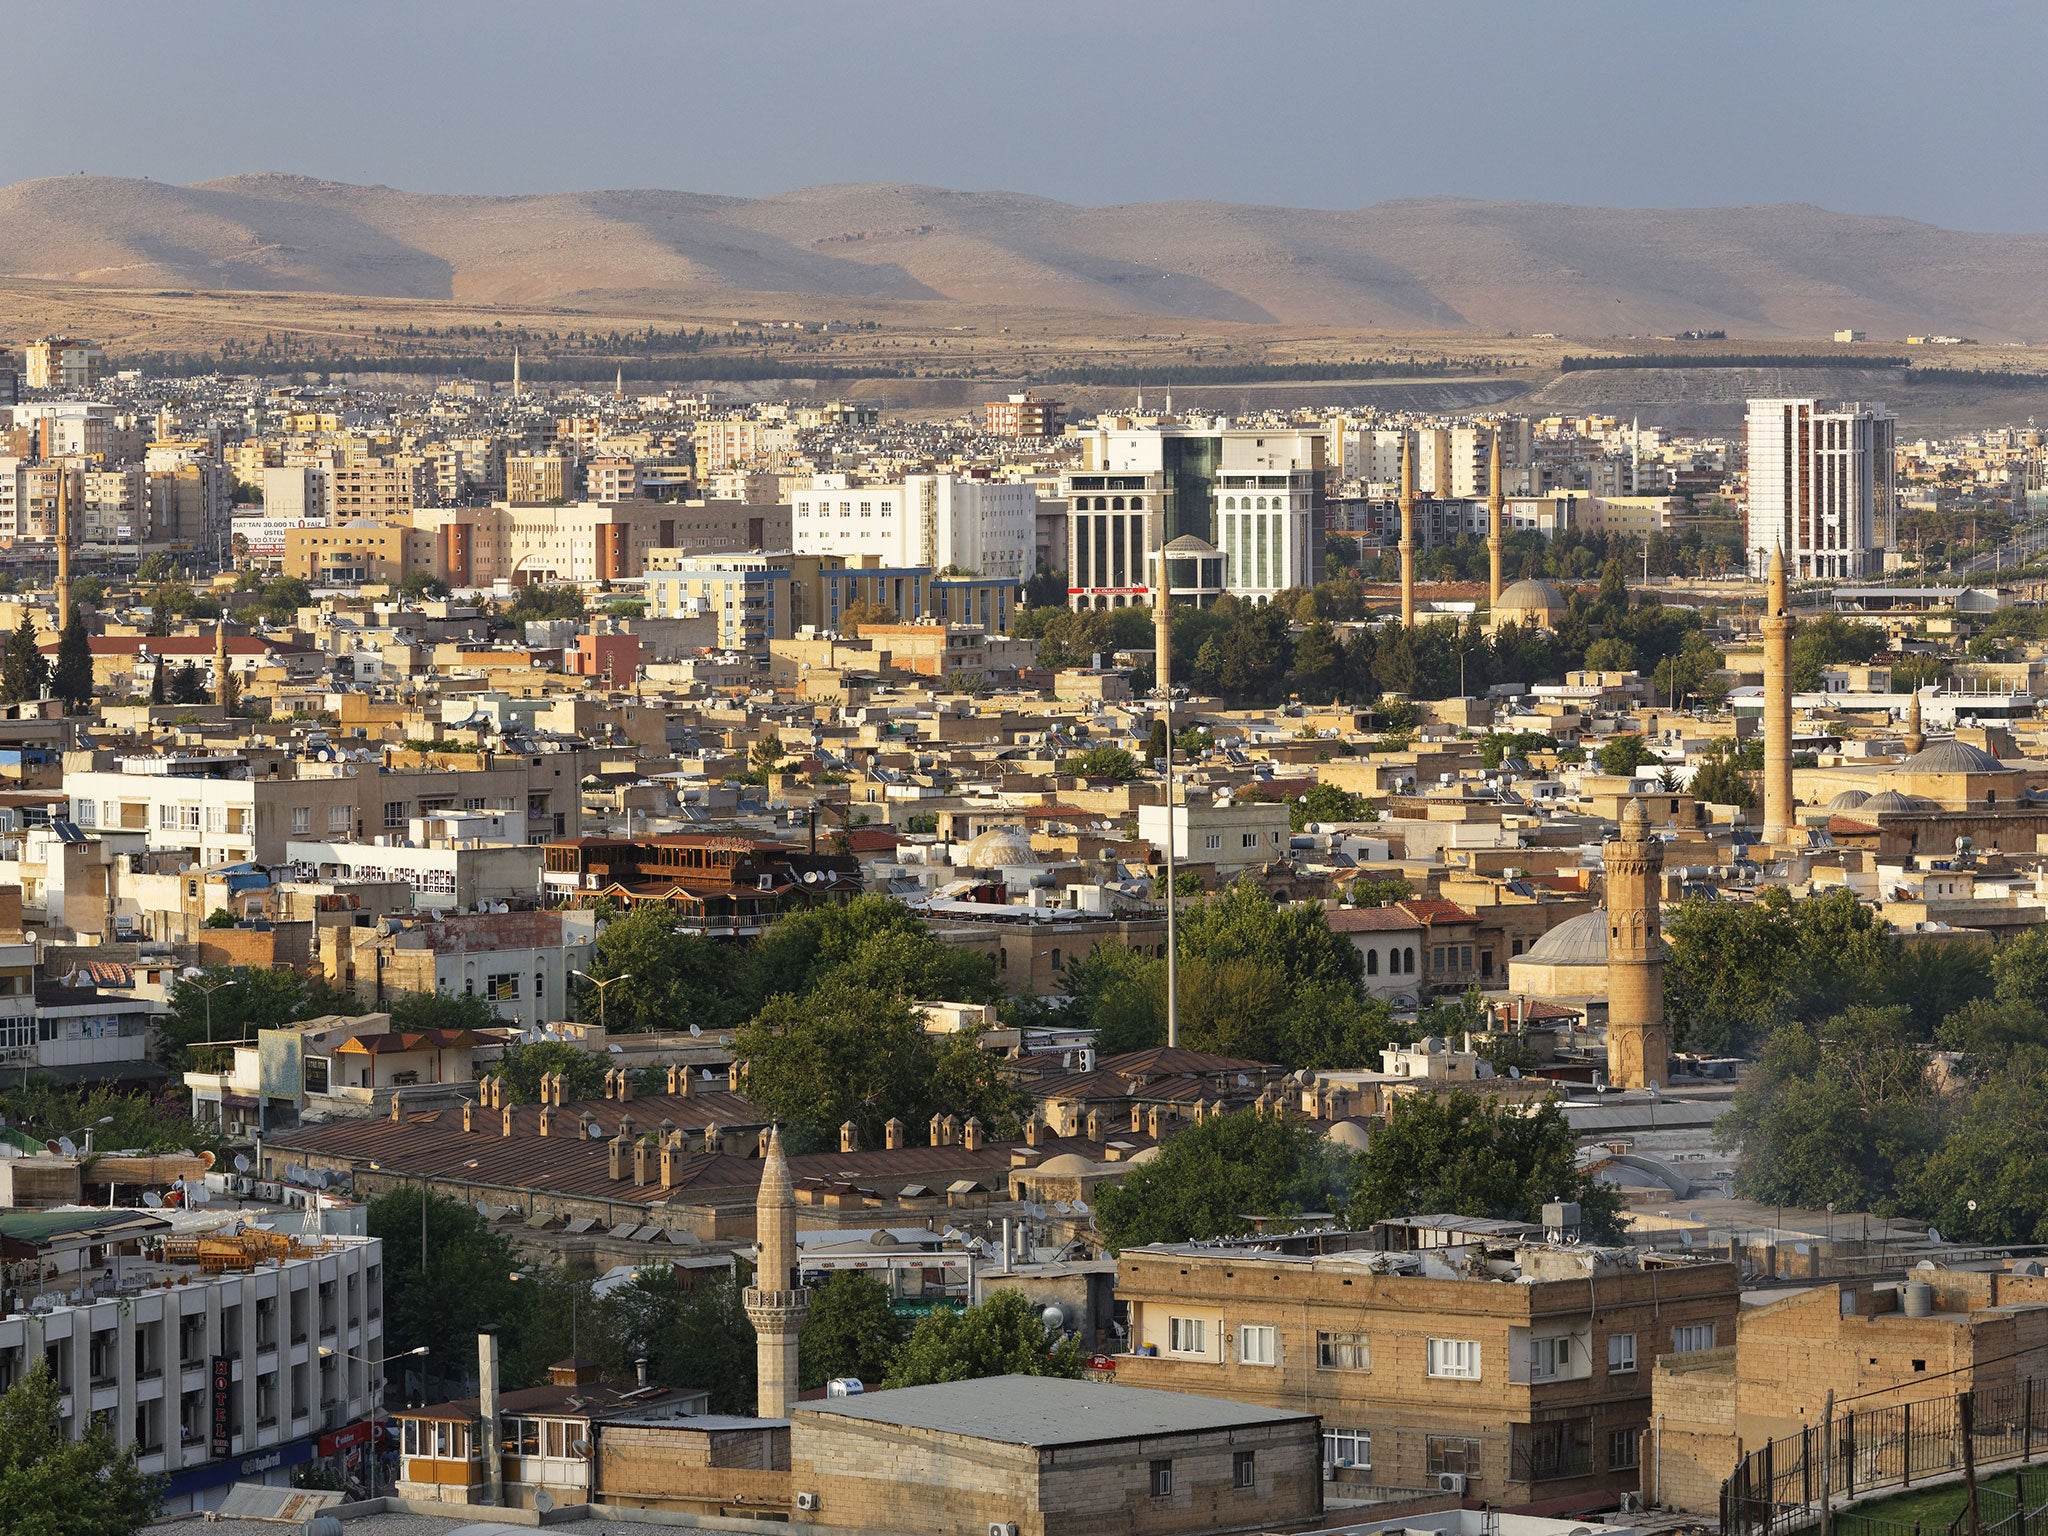 Turkey's southeastern city of Urfa